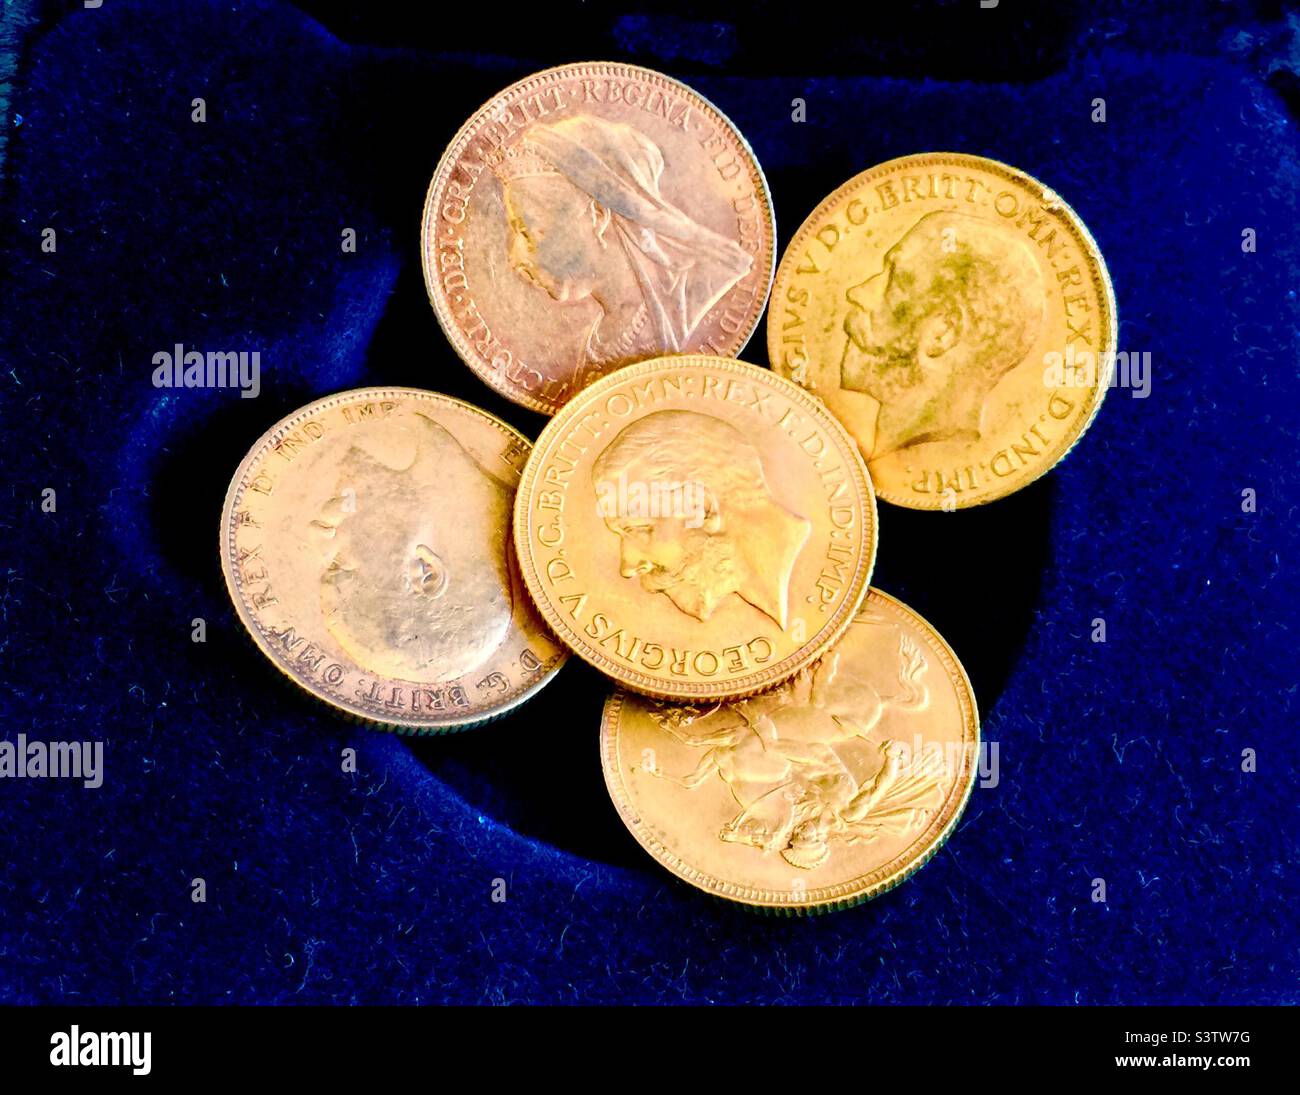 Five antique gold sovereign coins arranged on a rich blue velvet backdrop. Stock Photo